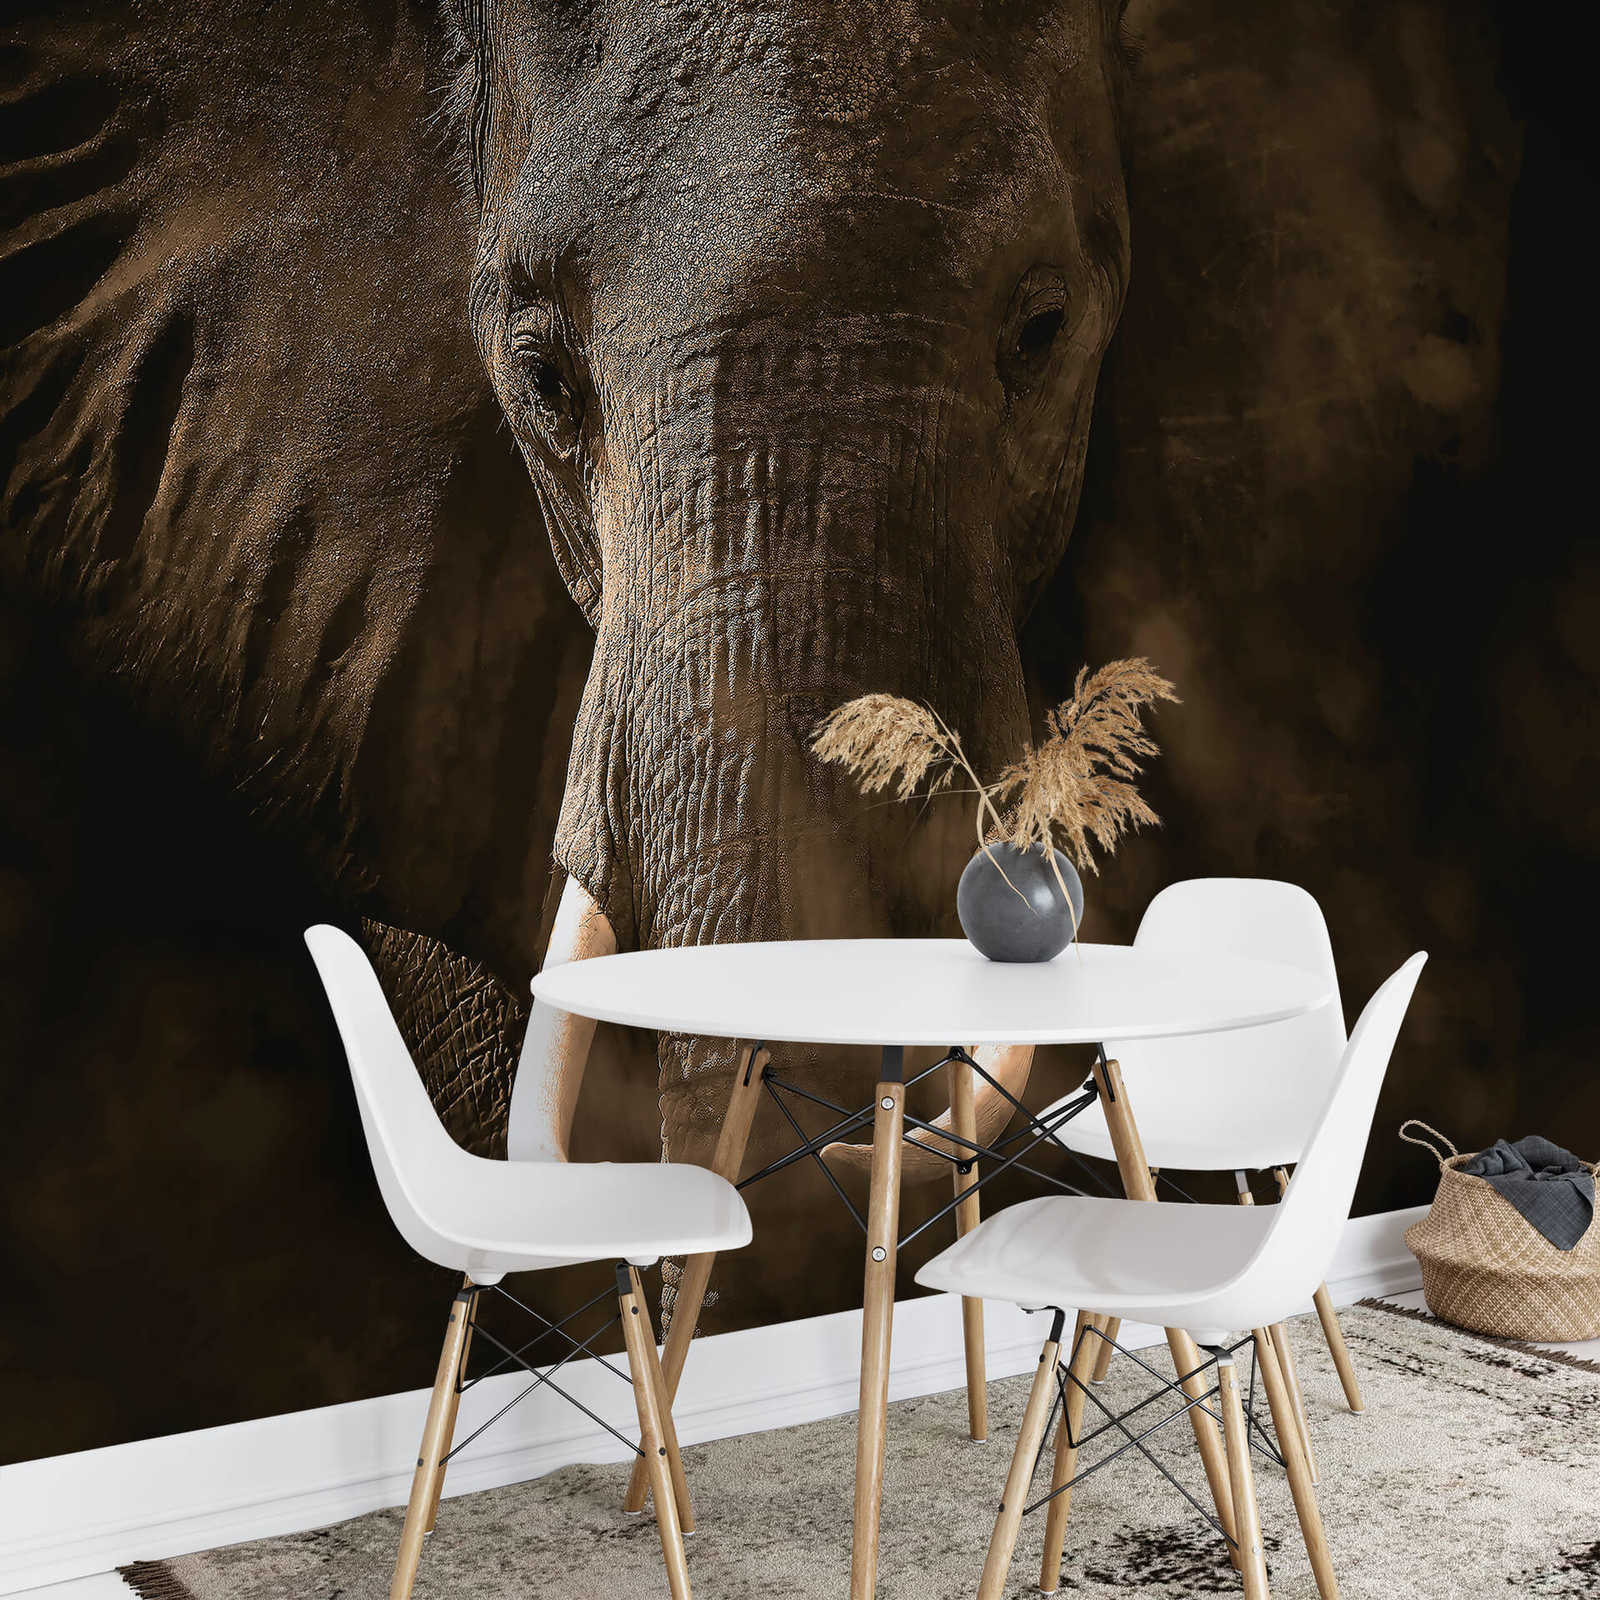             Fototapete Safari Tier Elefant – Grau, Braun, Weiß
        